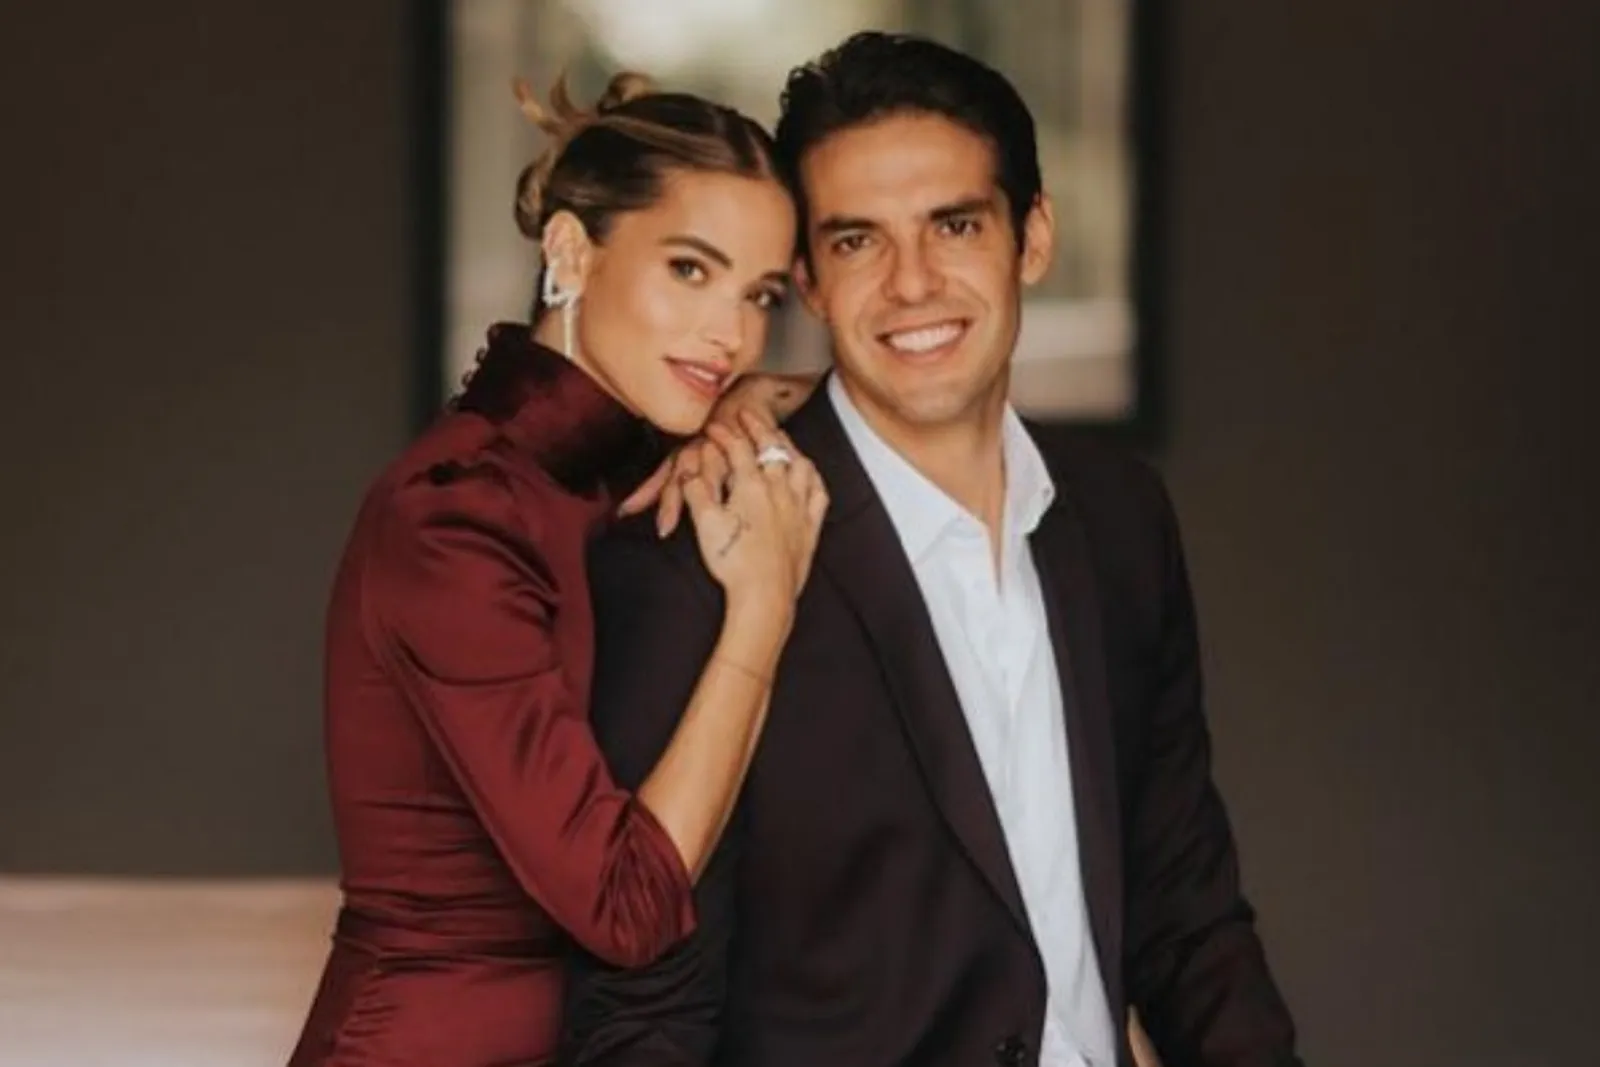 Mantan Istri Ricardo Kaka Ungkap Alasan Cerai: 'Dia Terlalu Sempurna'